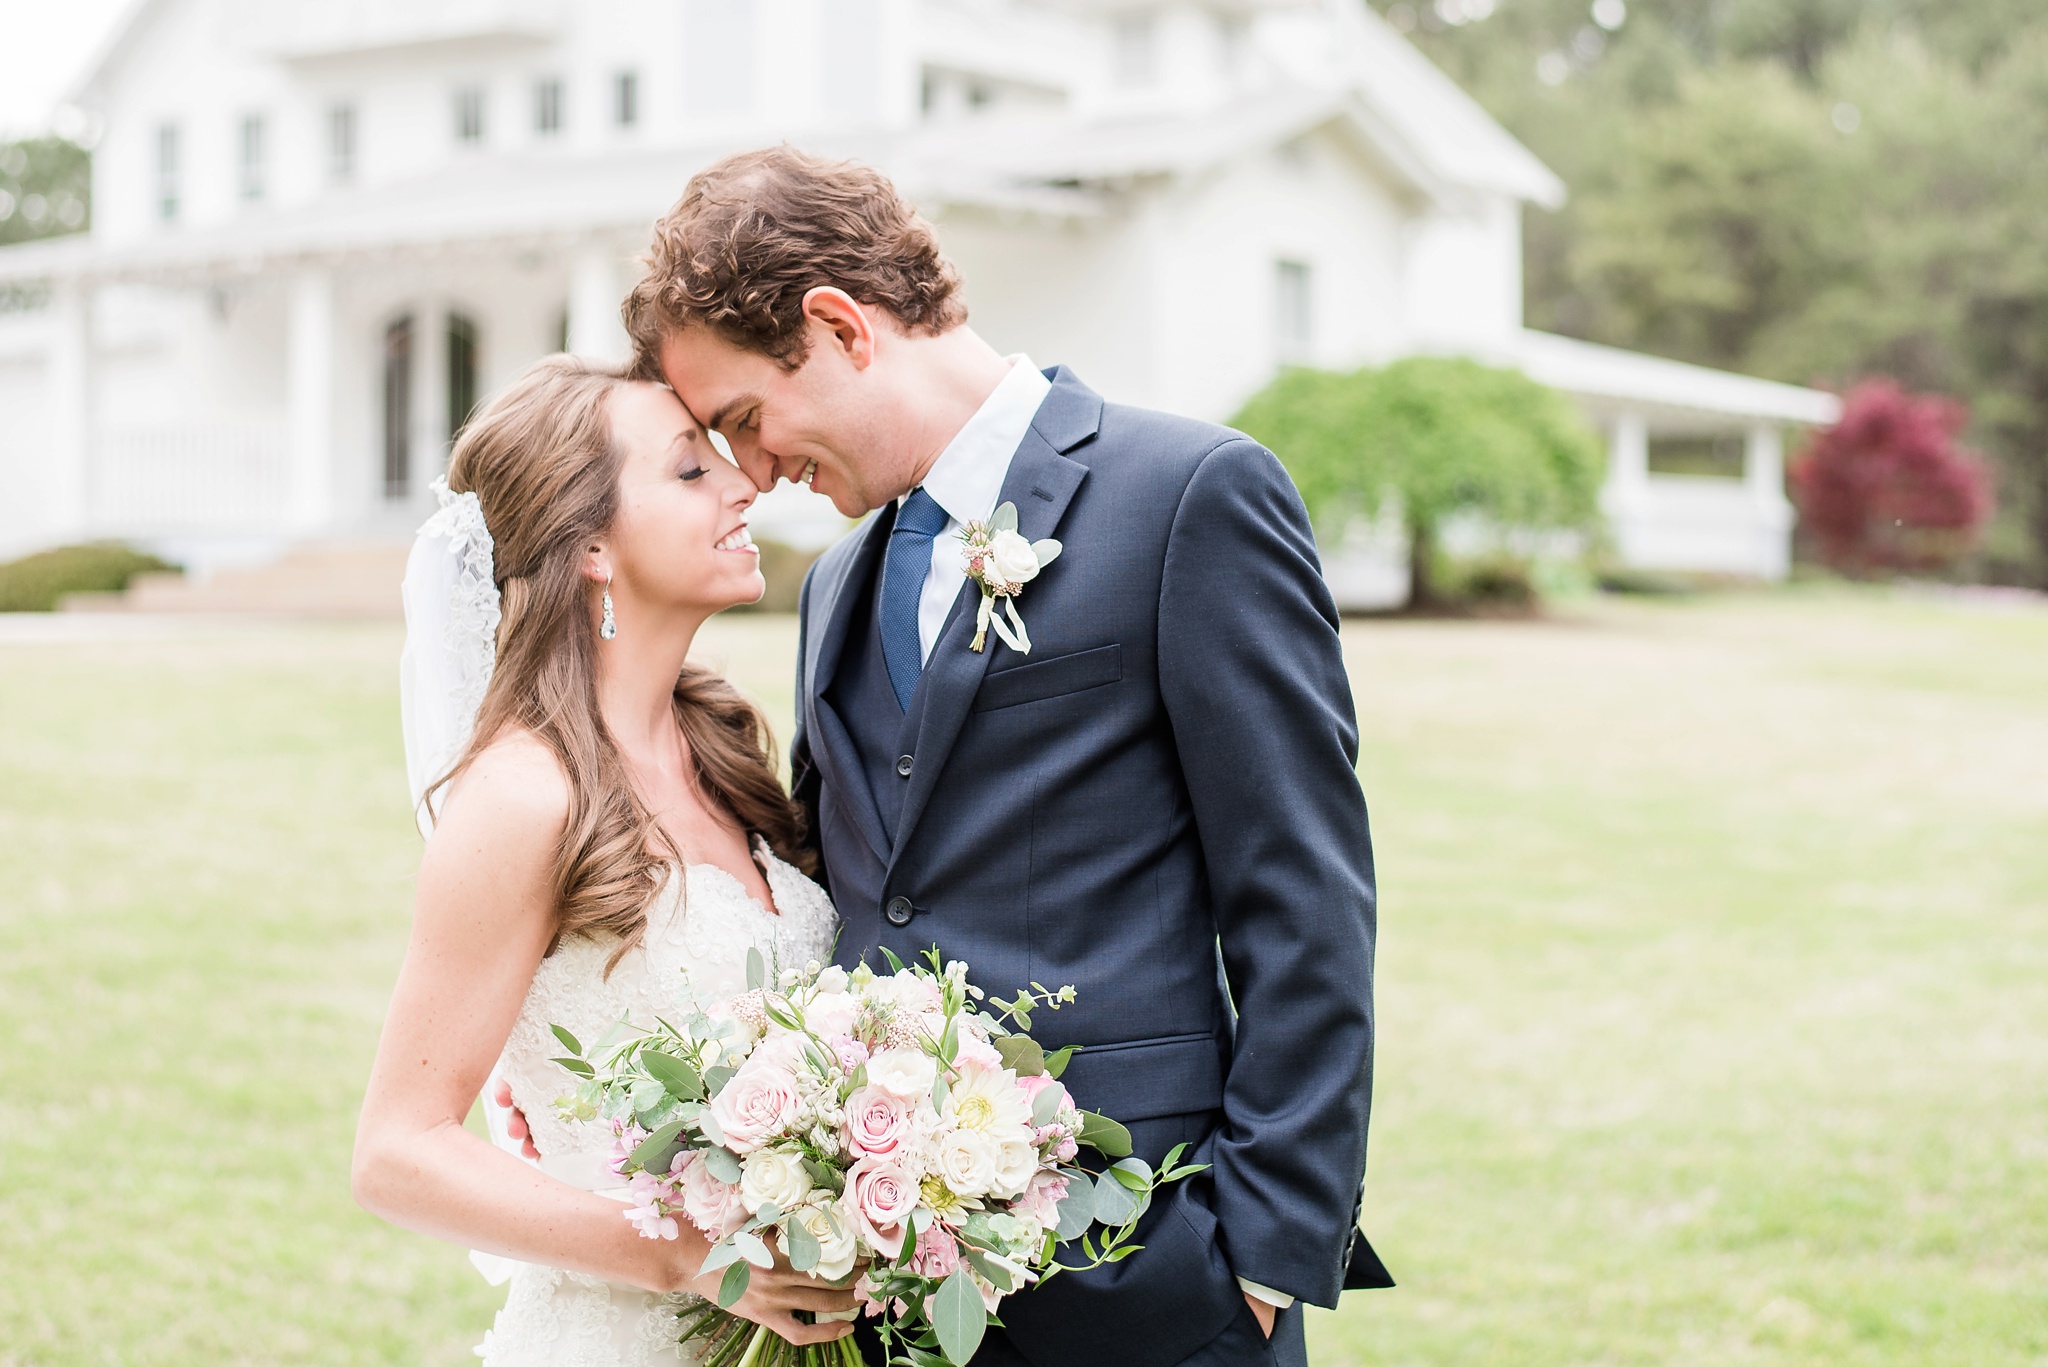 Sonnet House Blush and Gold Spring Wedding | Birmingham Alabama Wedding Photographers_0034.jpg